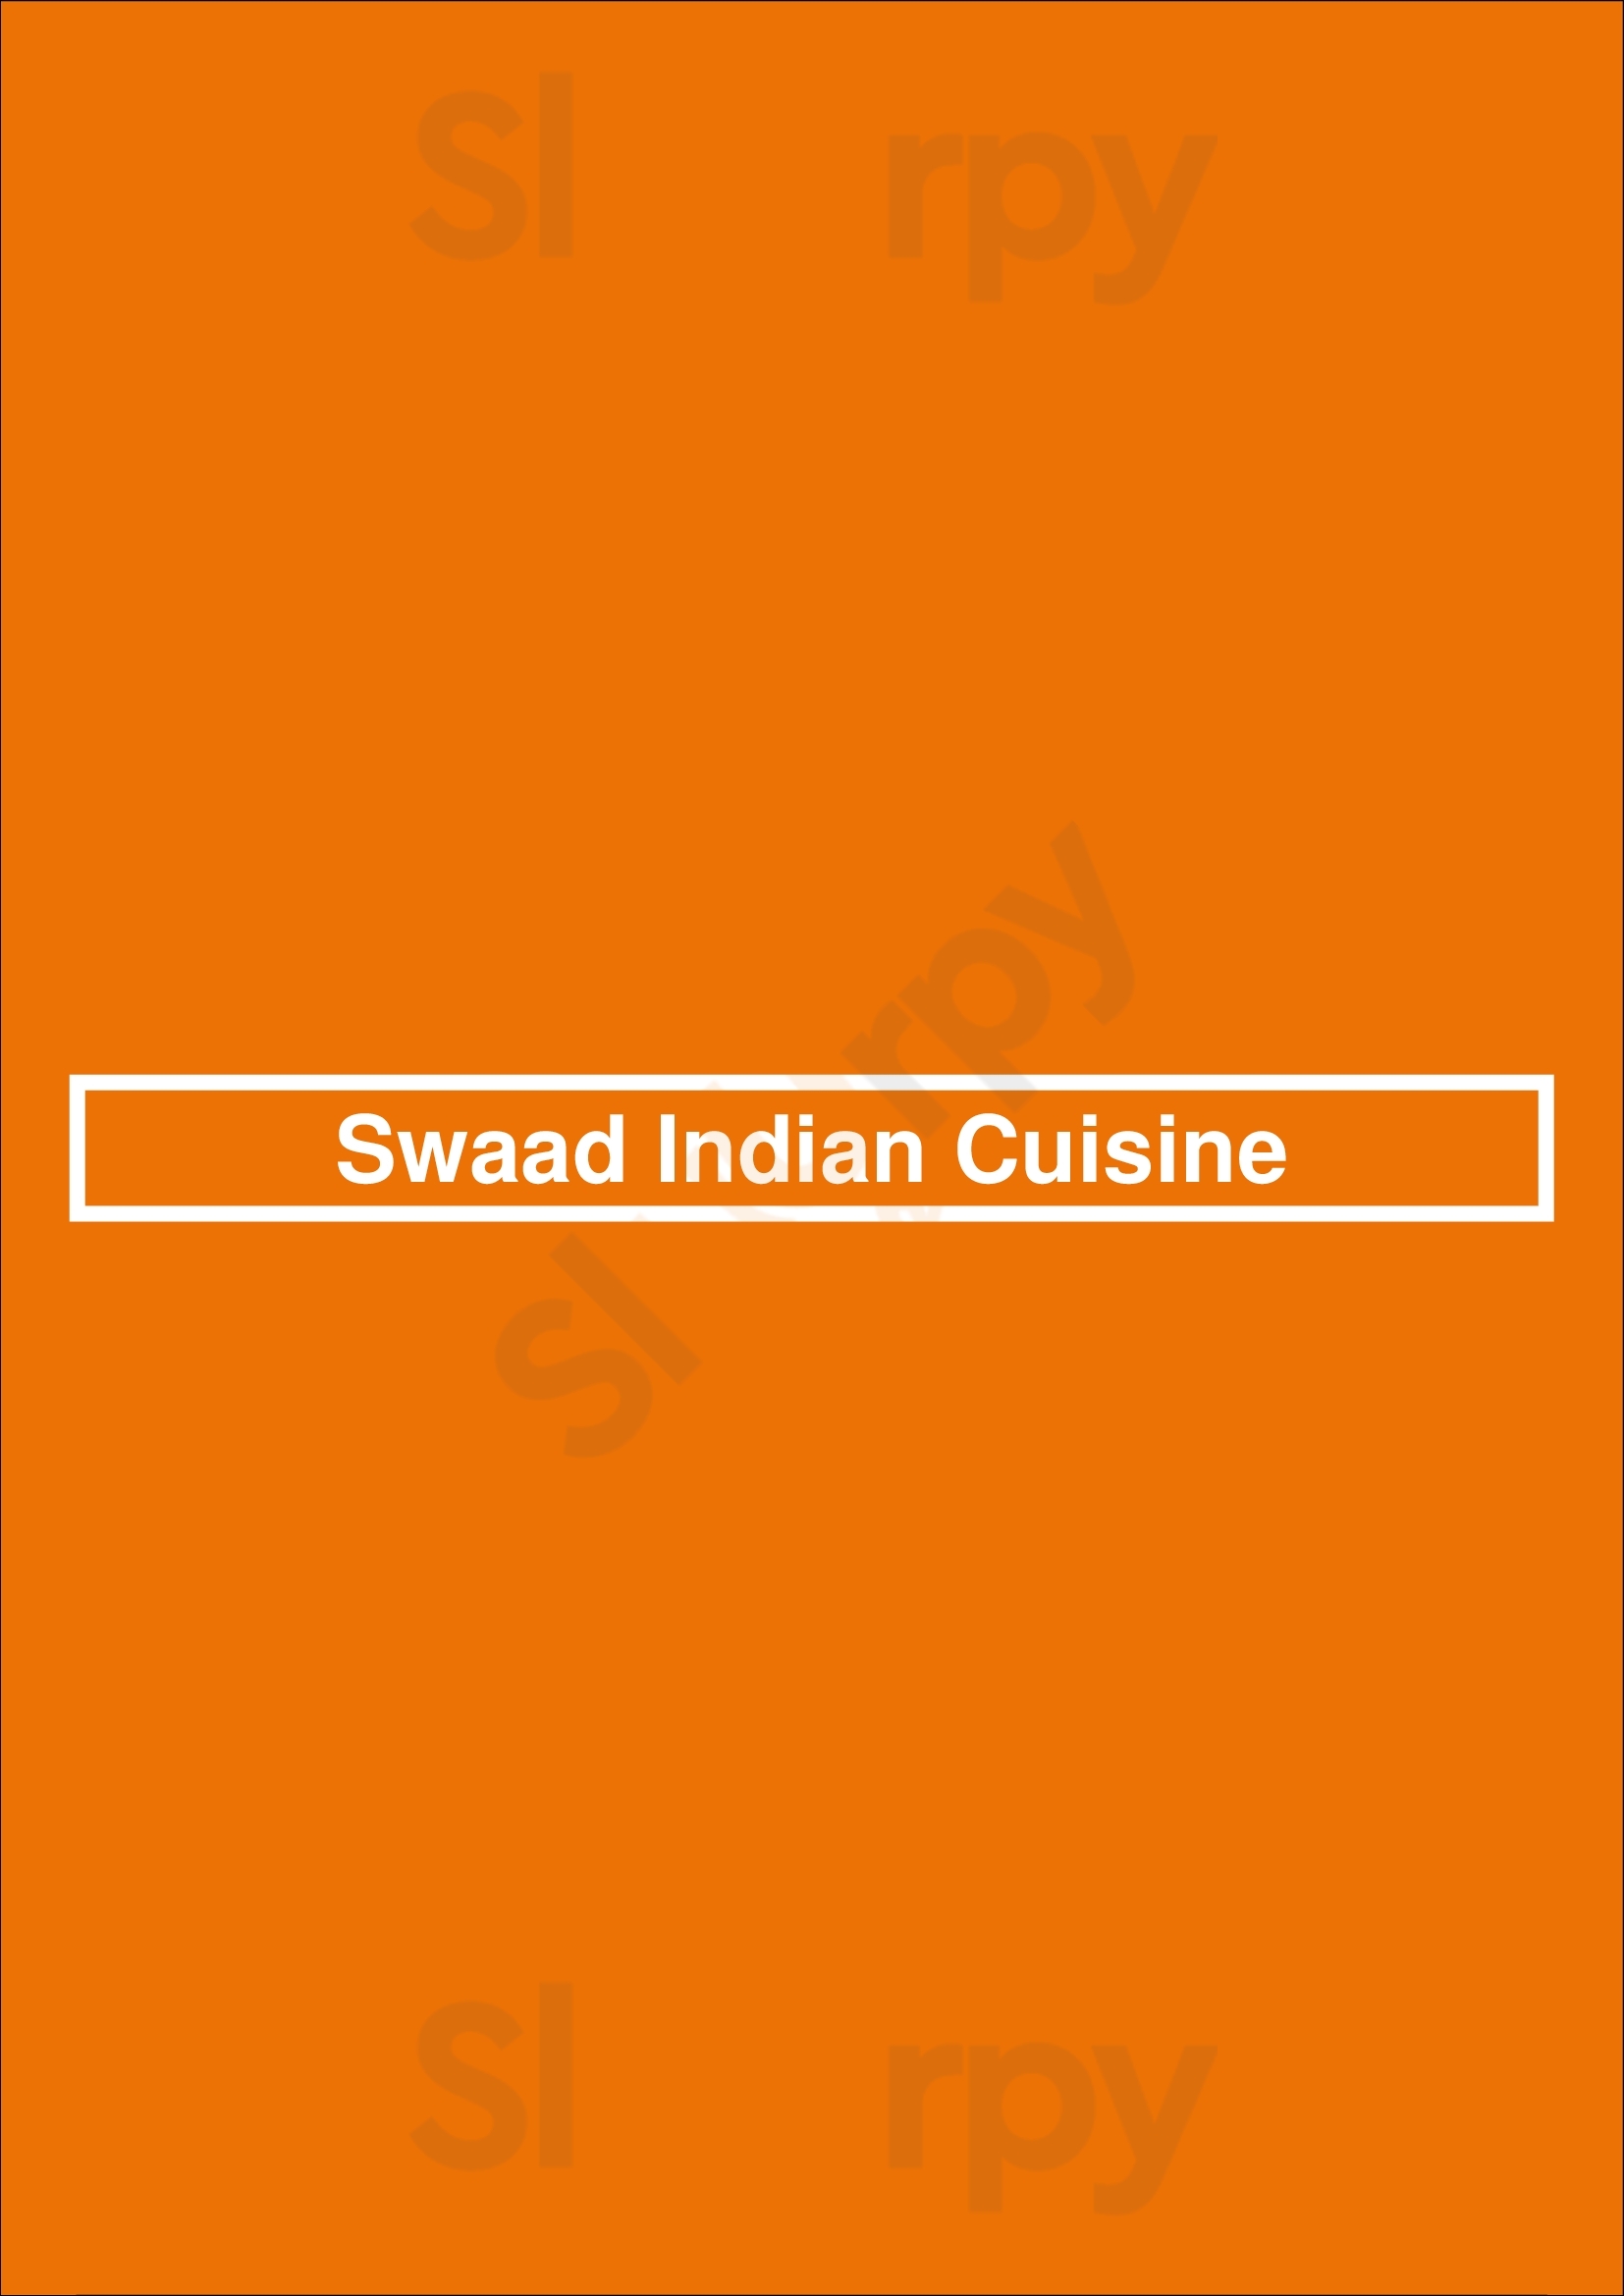 Swaad Indian Cuisine San Jose Menu - 1